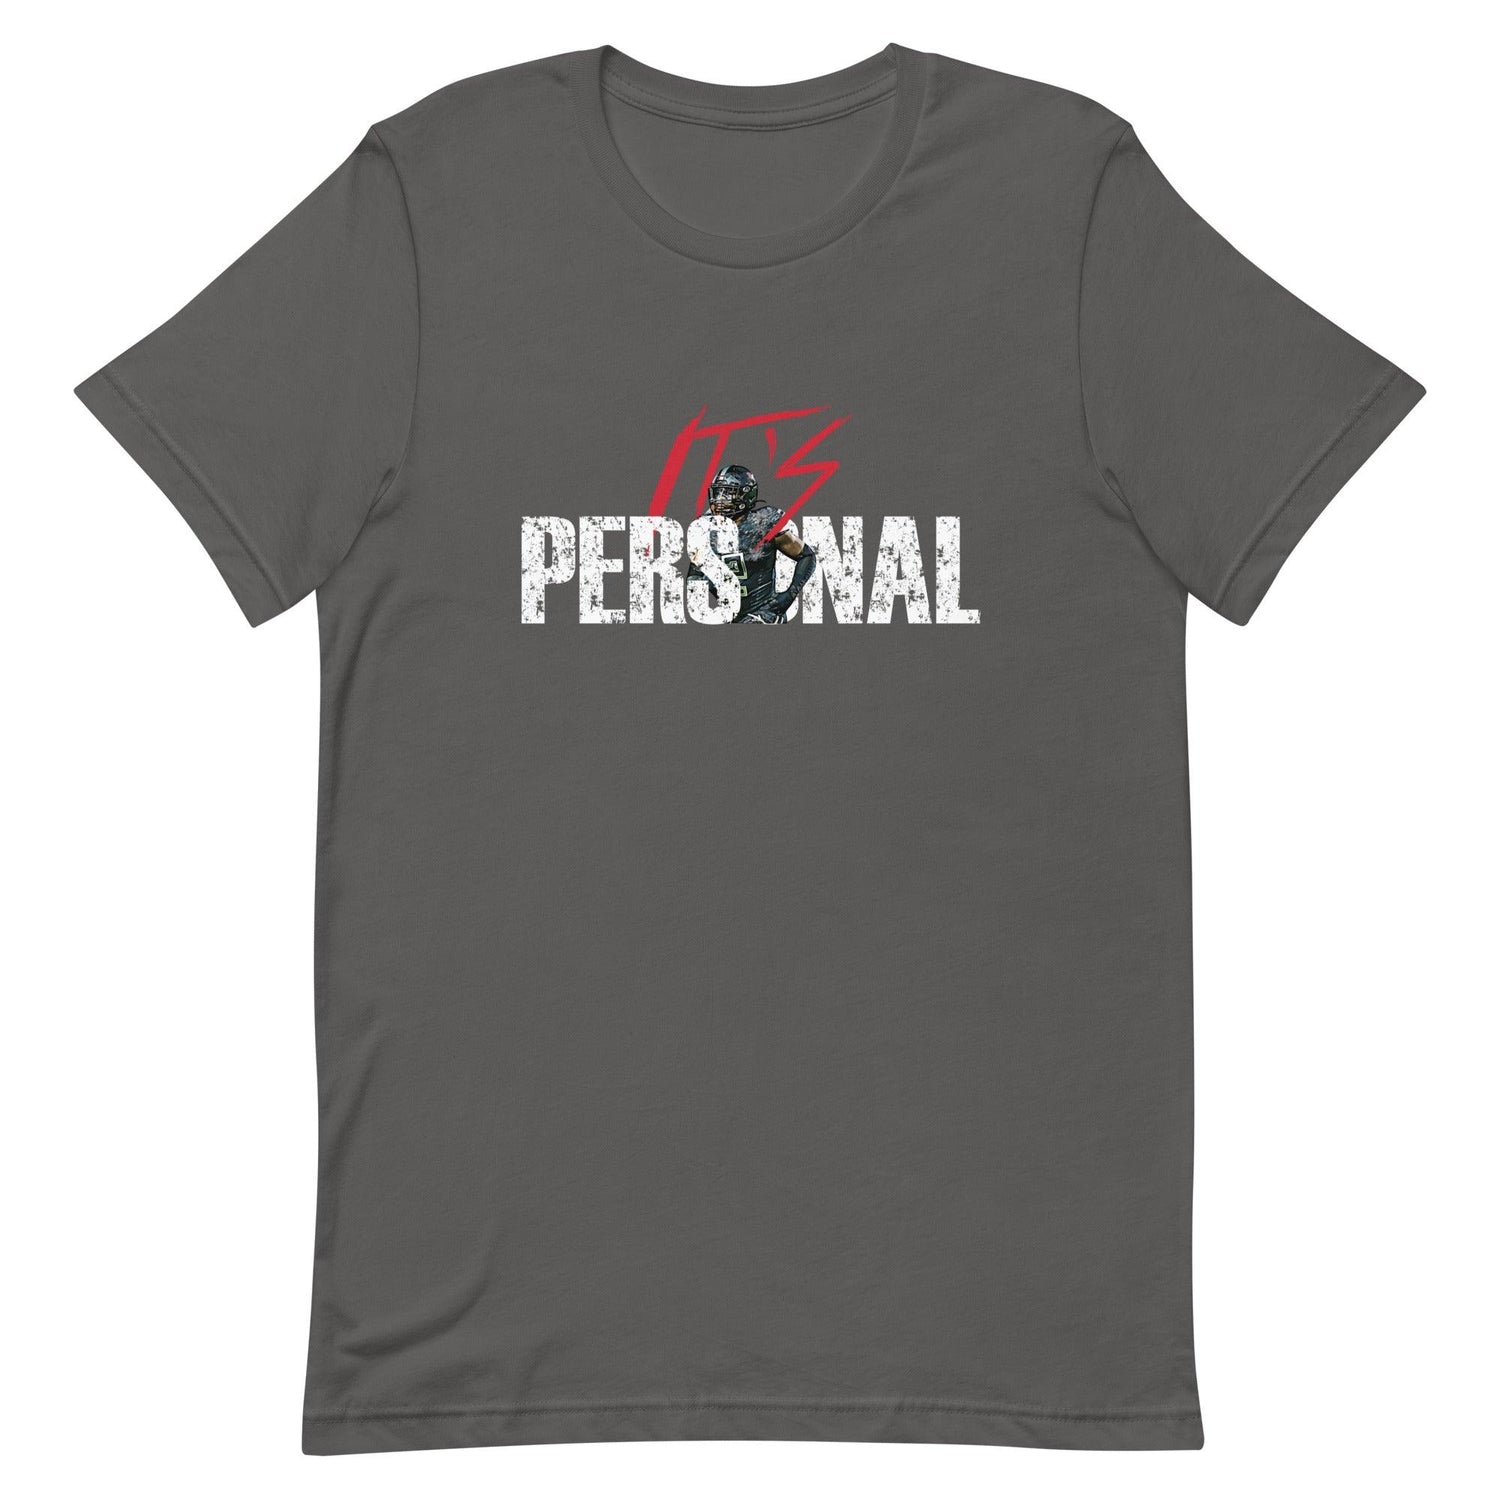 Kailon Davis "Its Personal" t-shirt - Fan Arch